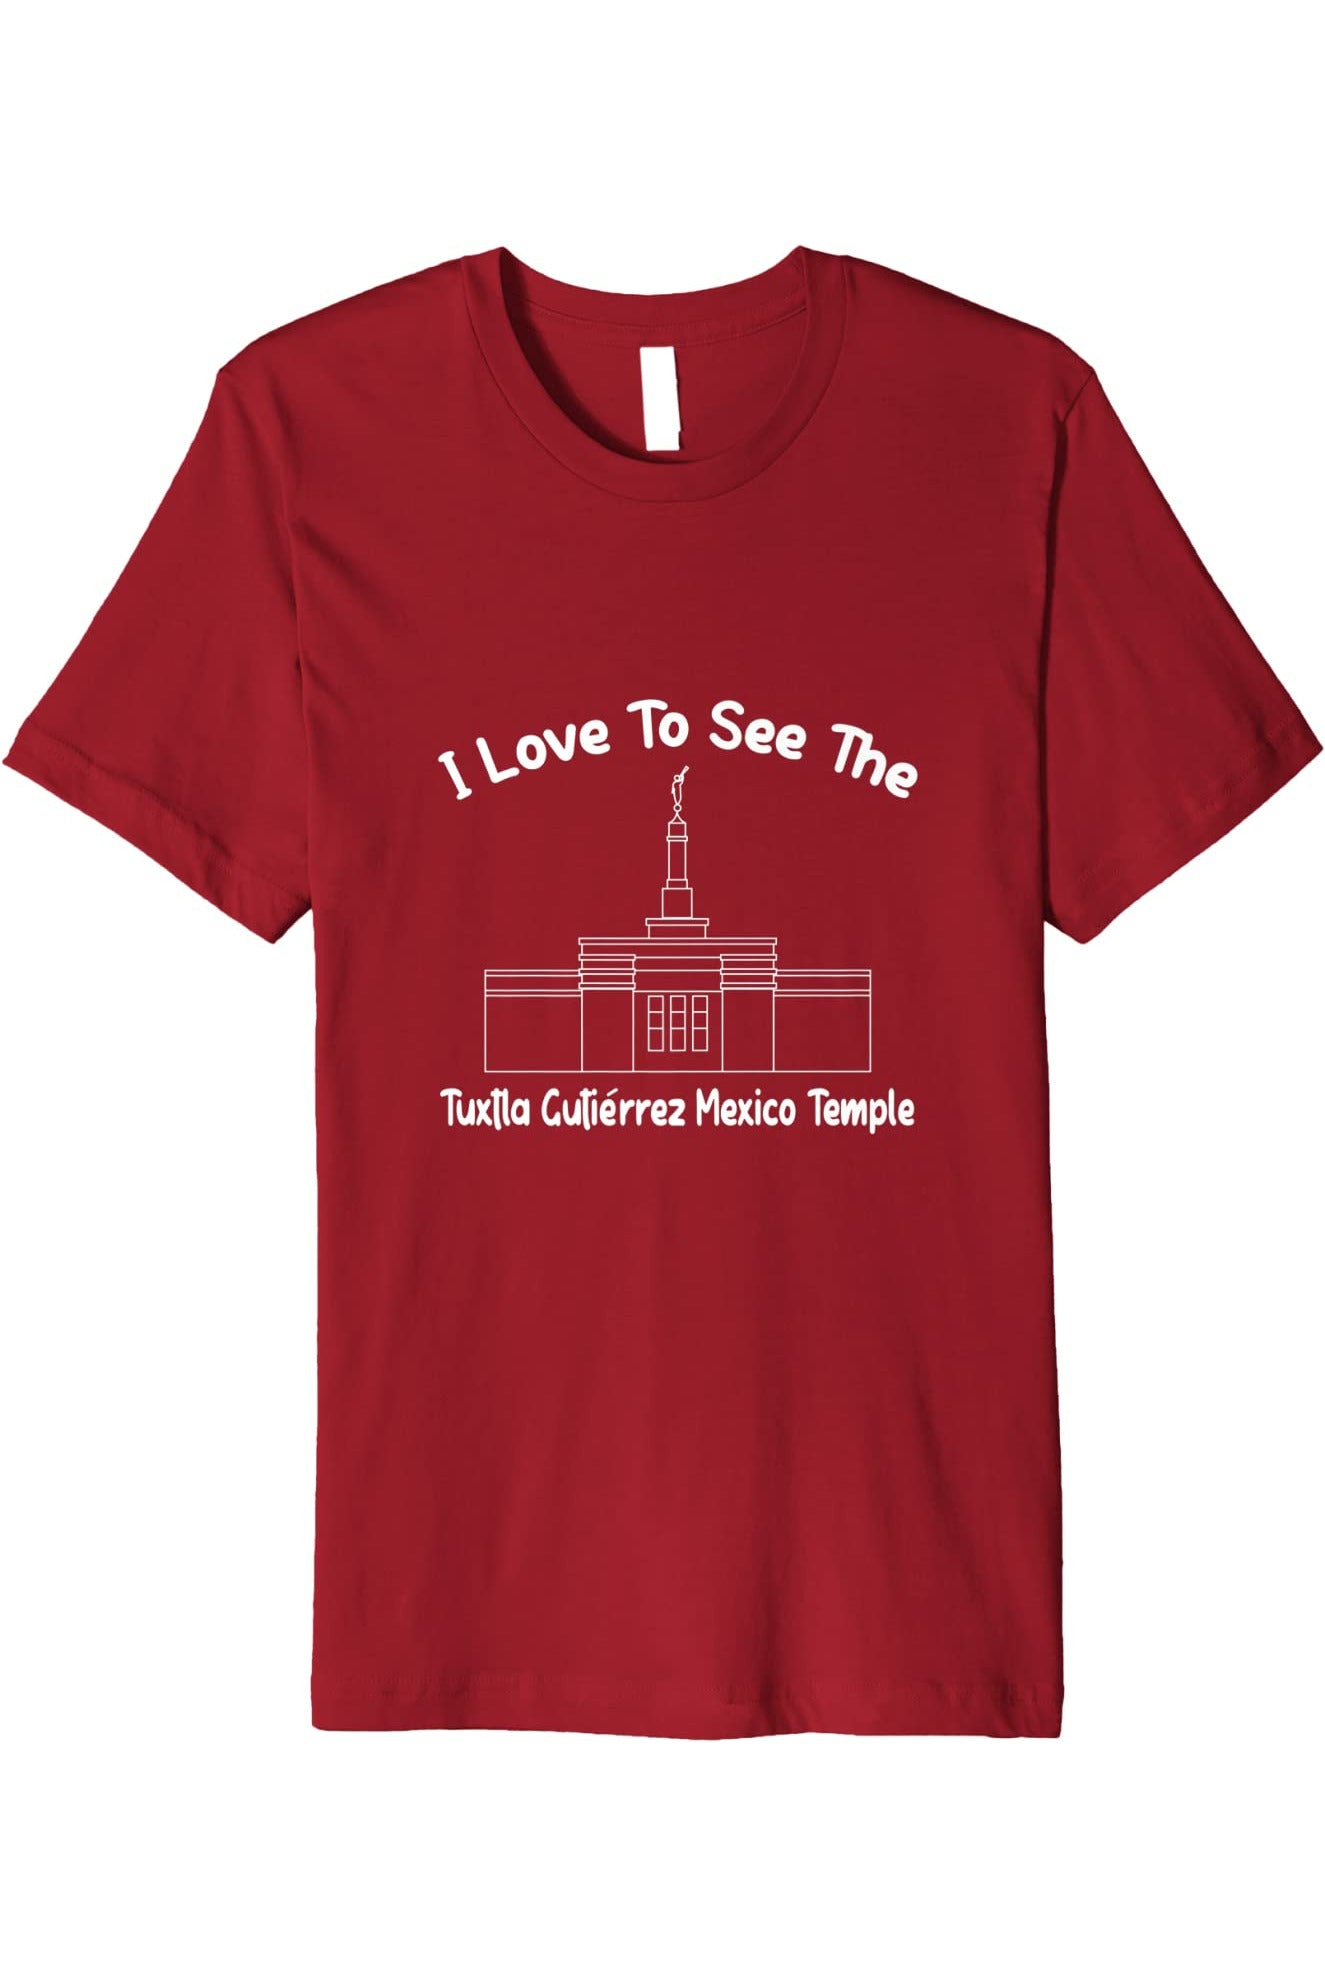 Tuxtla Gutierrez Mexico Temple T-Shirt - Premium - Primary Style (English) US